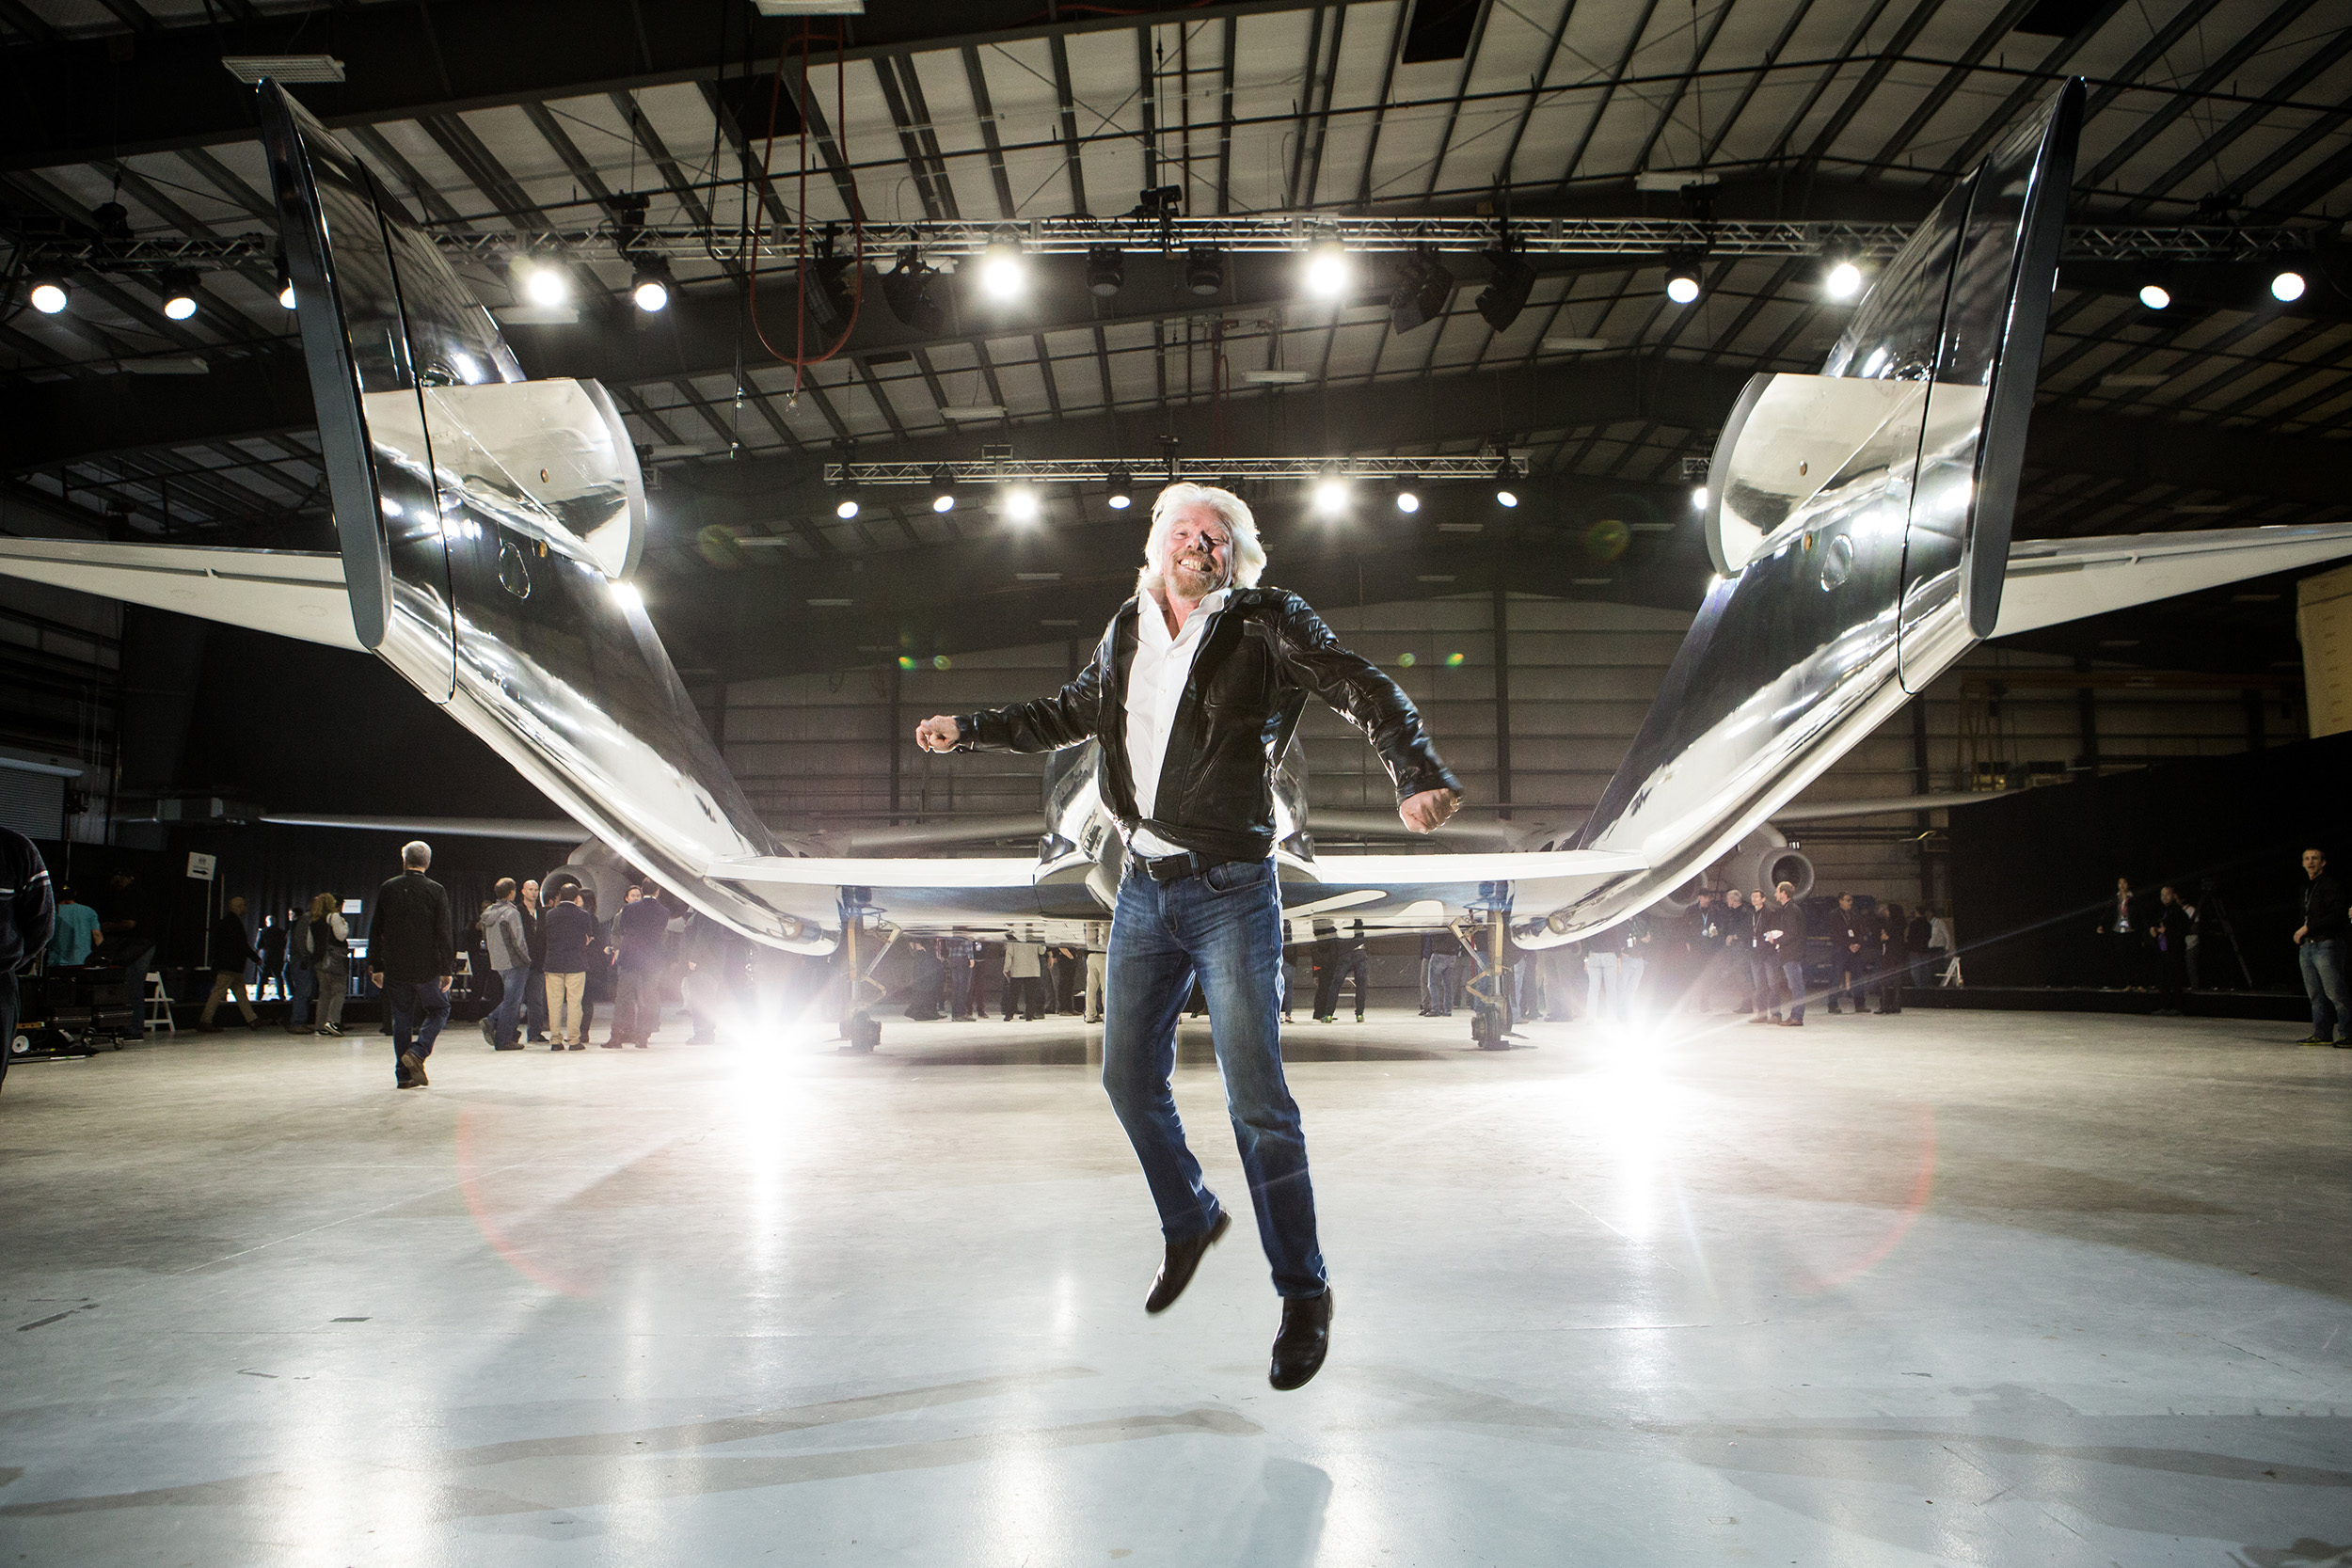 To improve mental health, Sir Richard Branson says limit alcohol